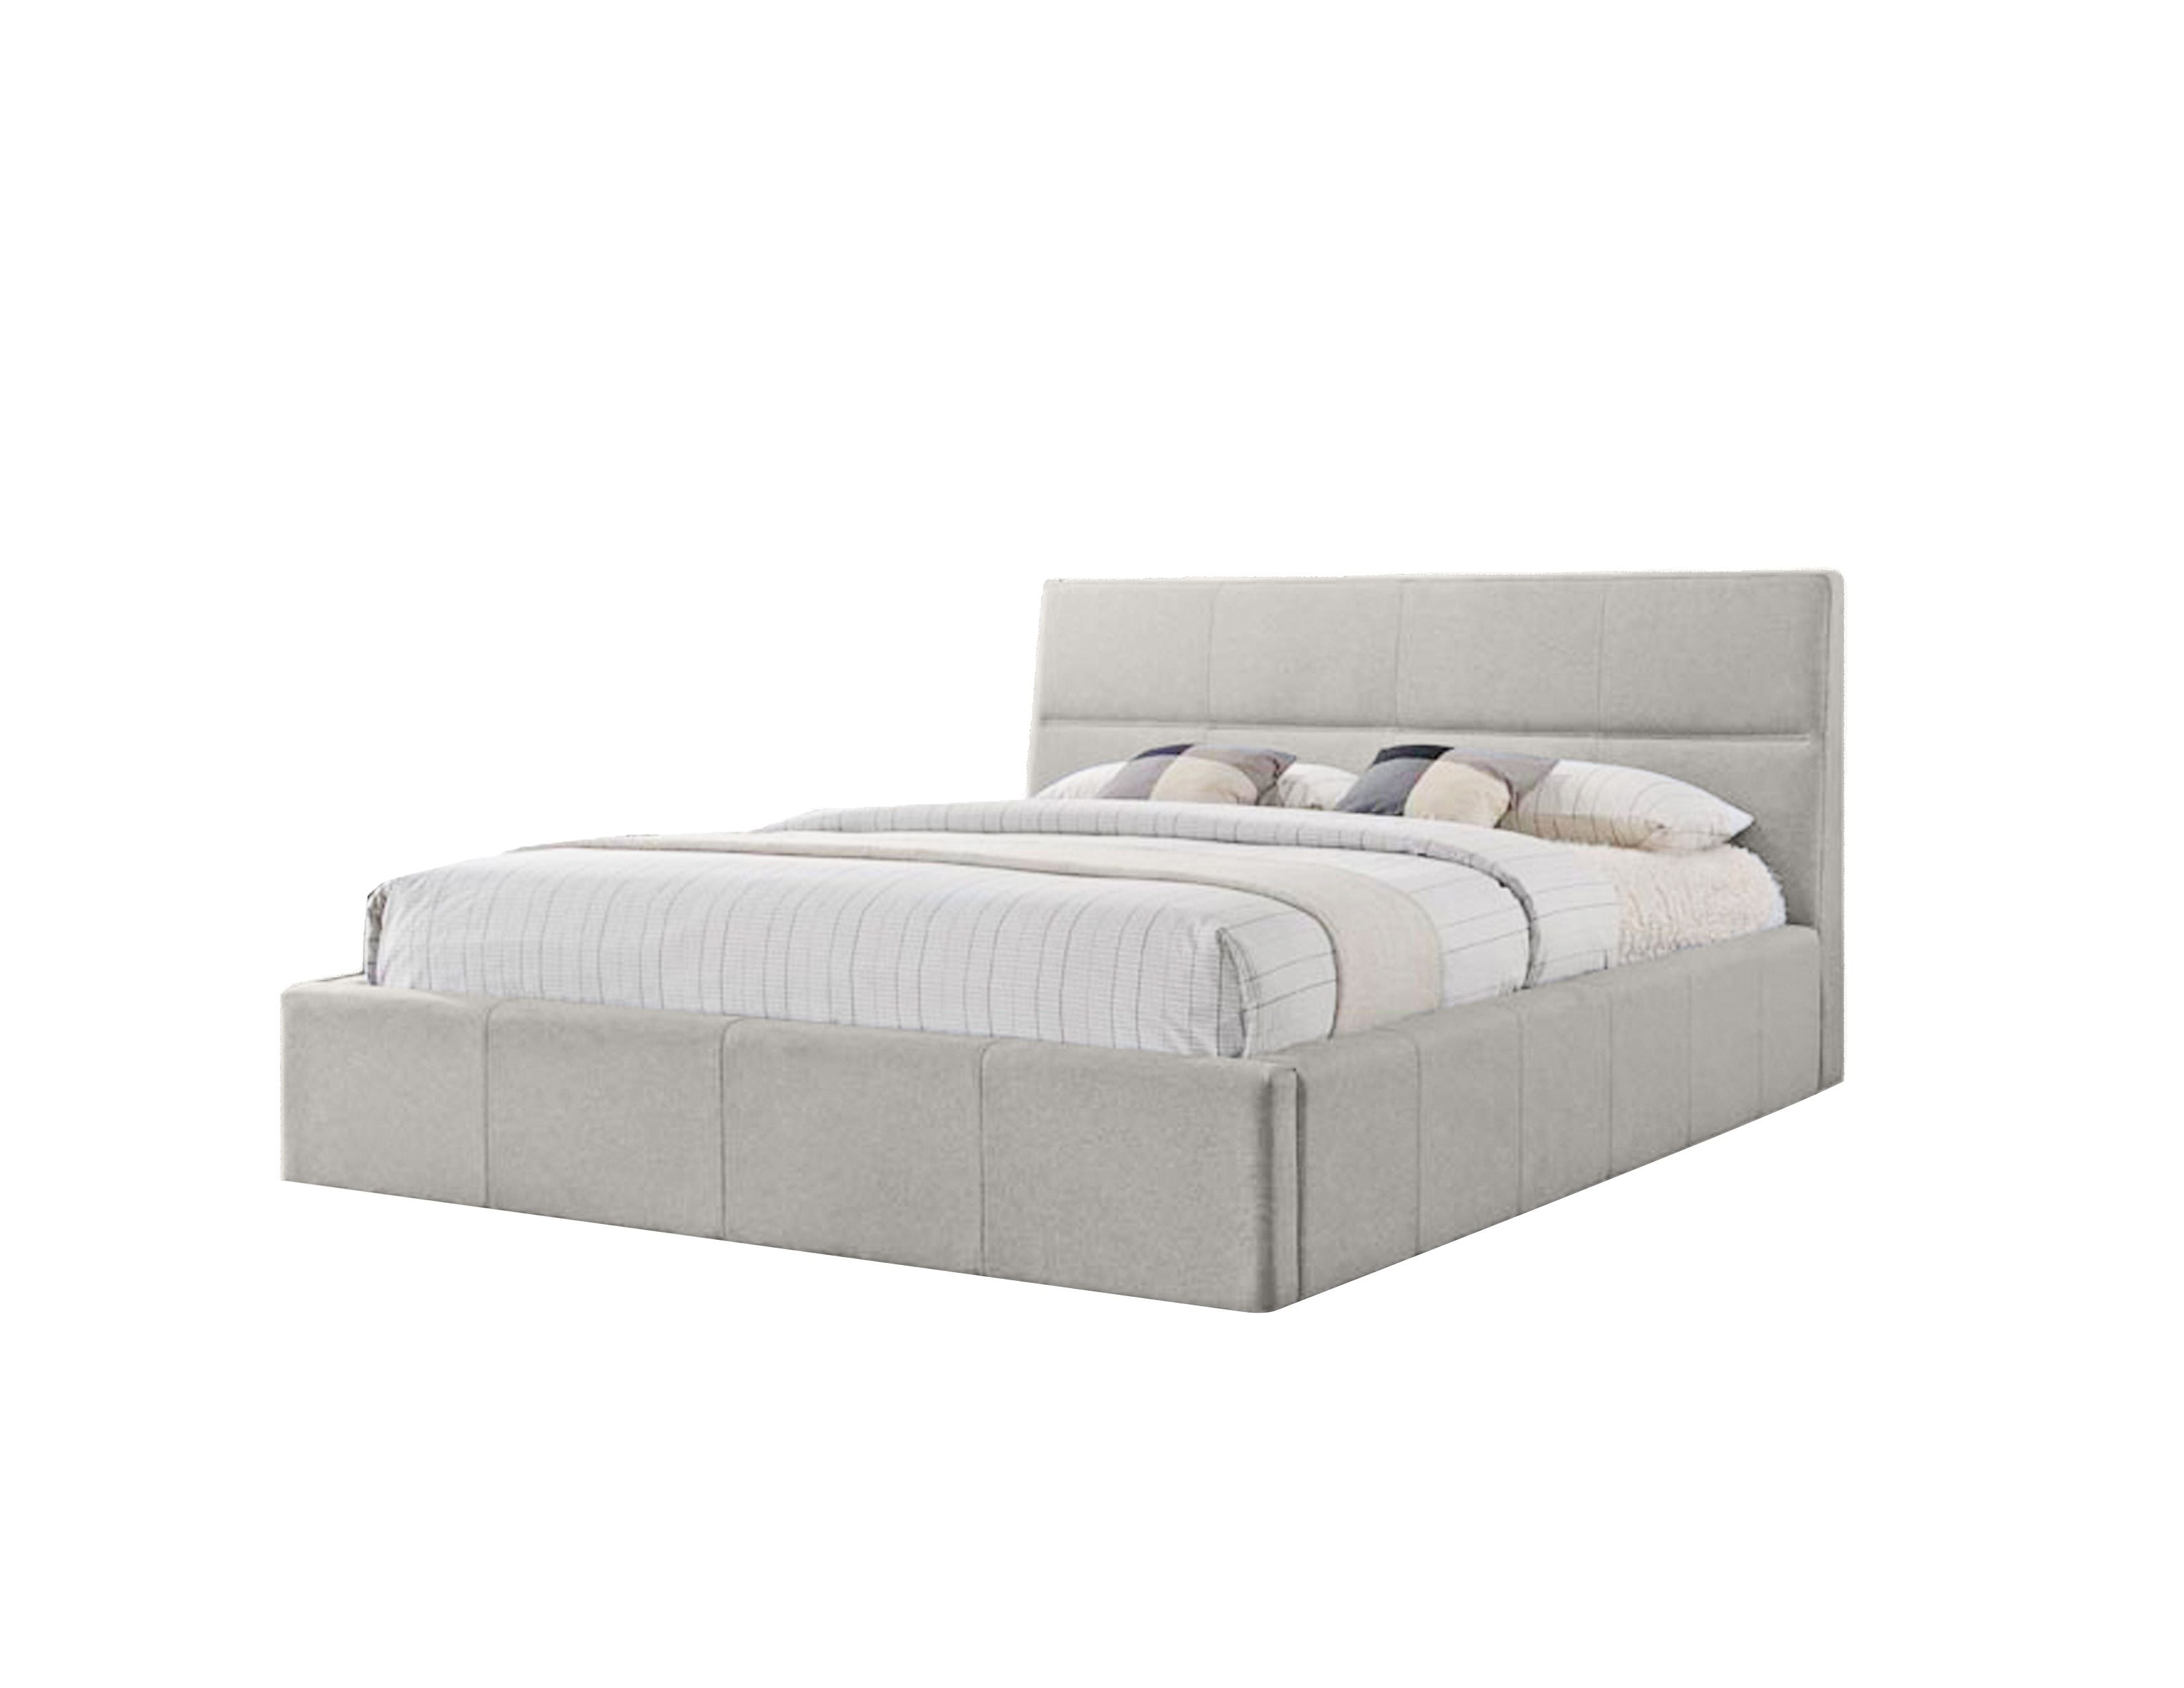 REVE Upholstered  Bed in Ivory